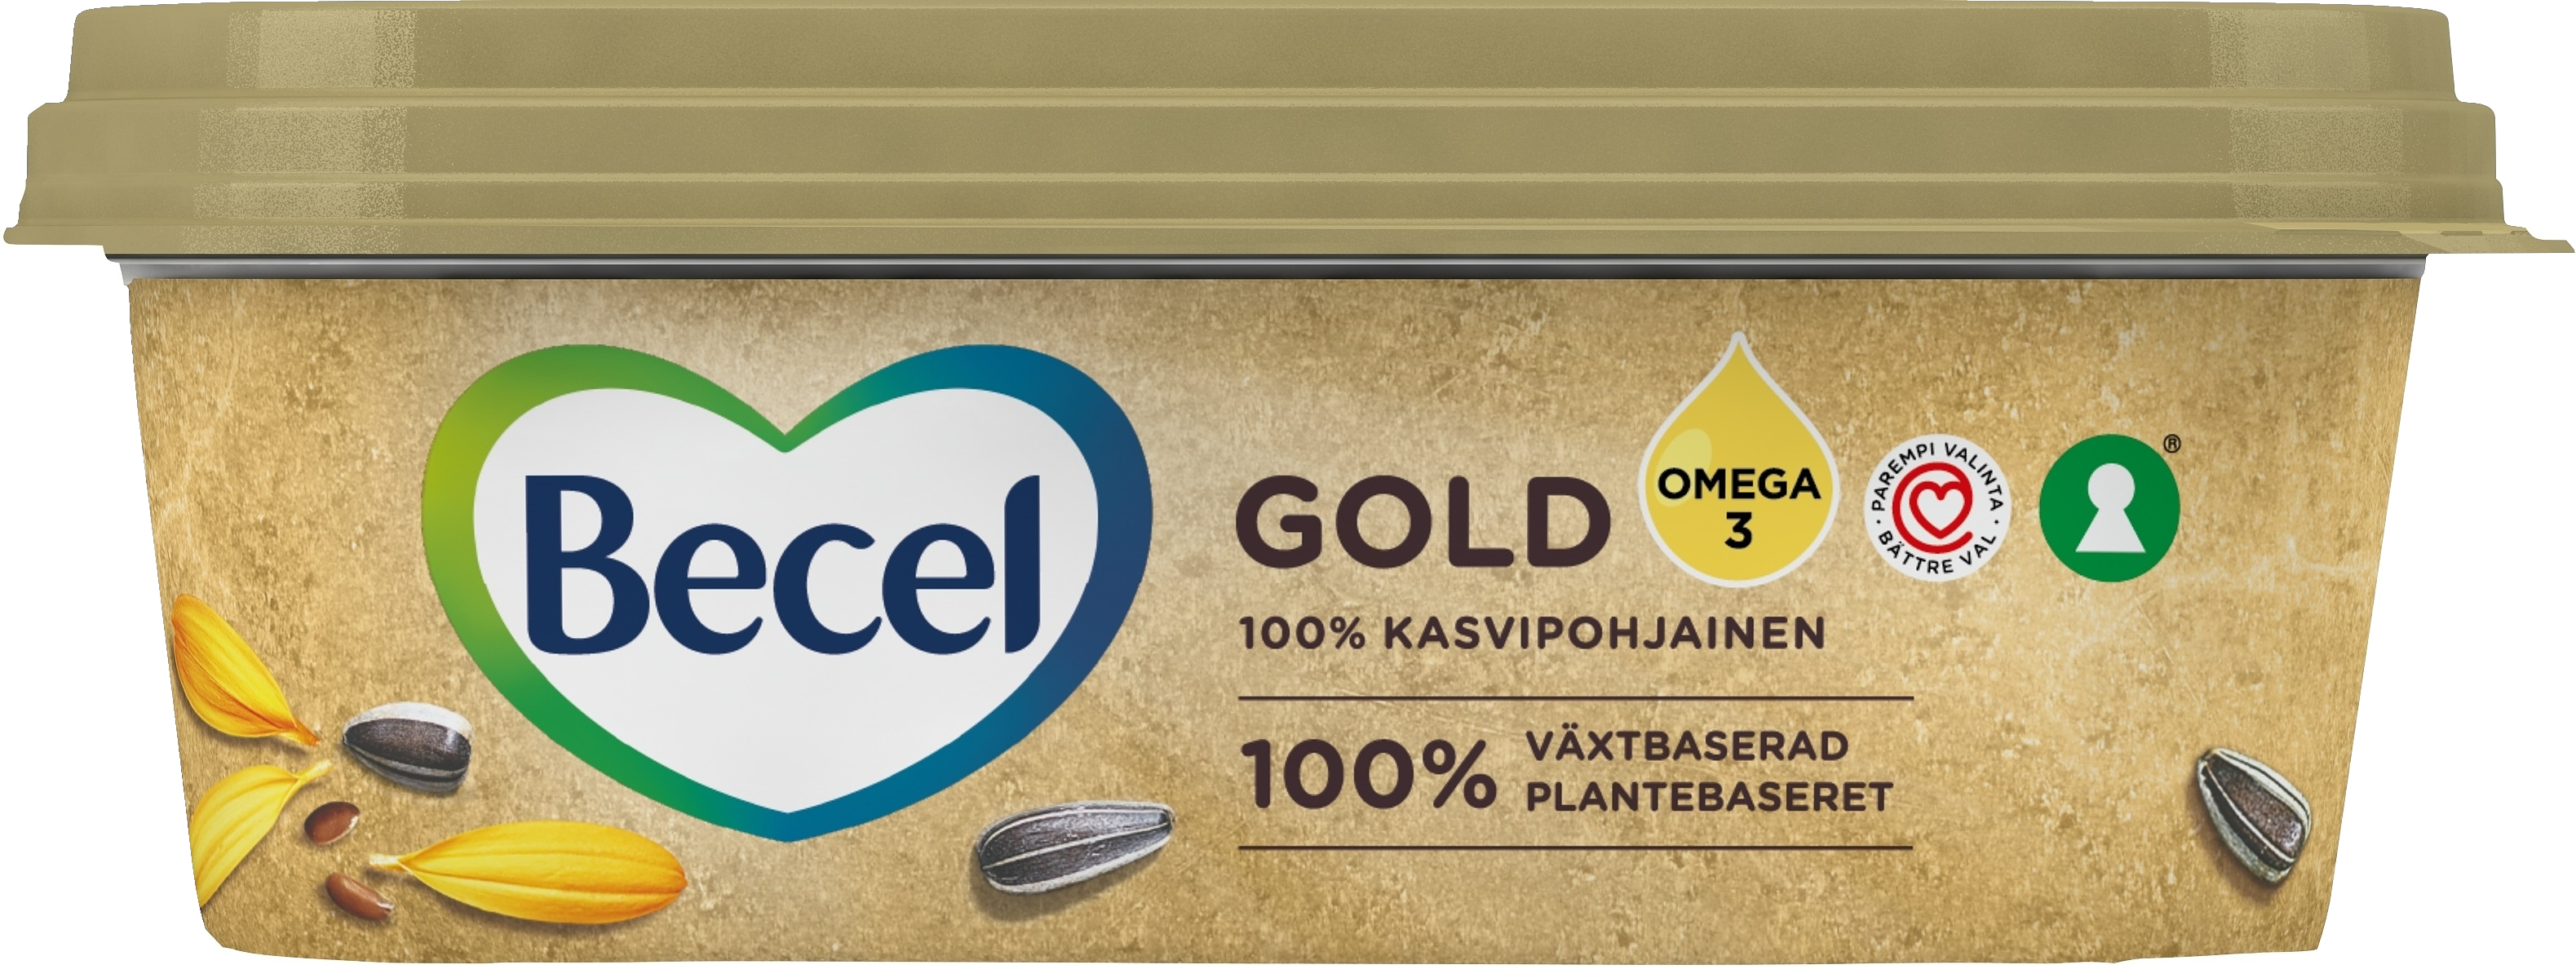 Becel 380g Gold kasvirasvalevite 70%